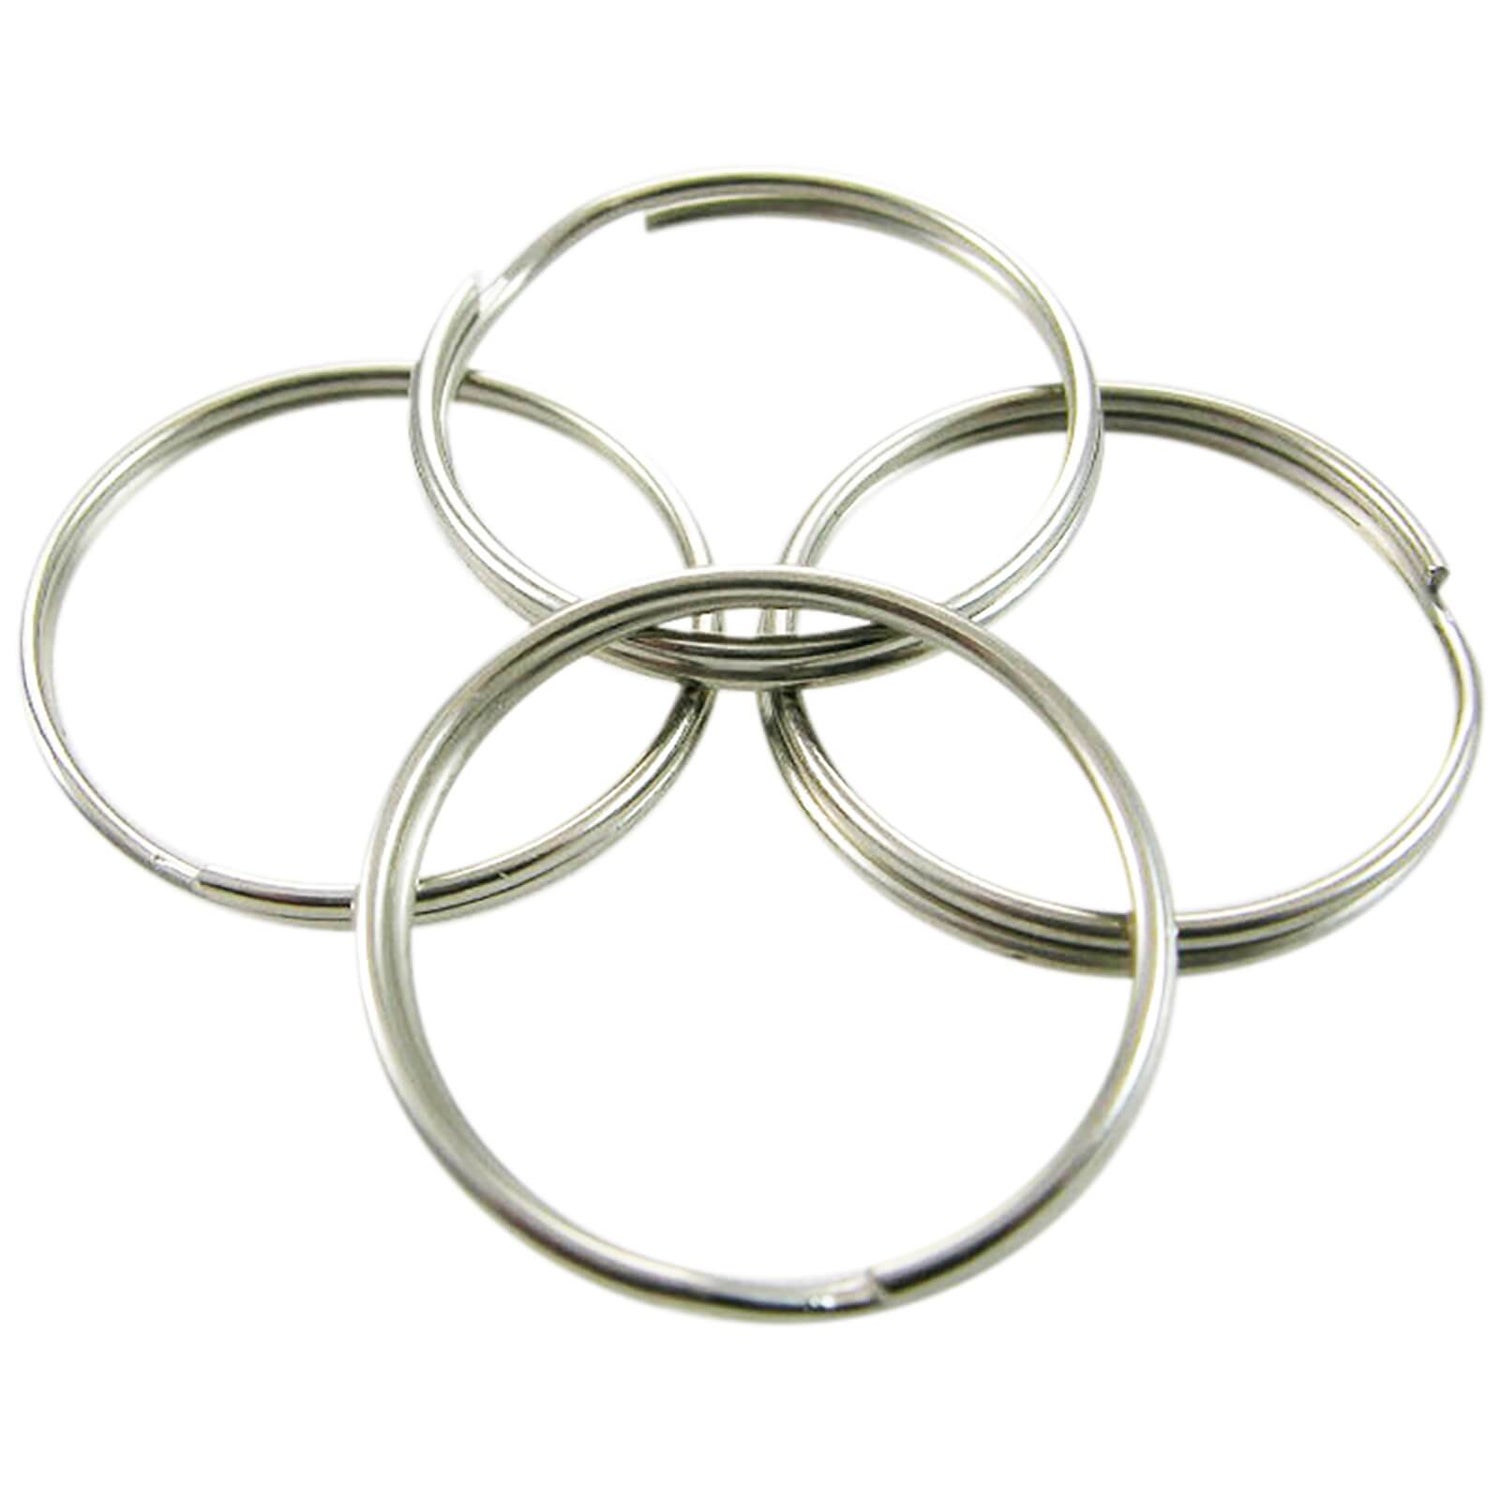 New Split Rings Key Ring 50mm Round Extra Large keyRing Holder Free P&P UK 2" 